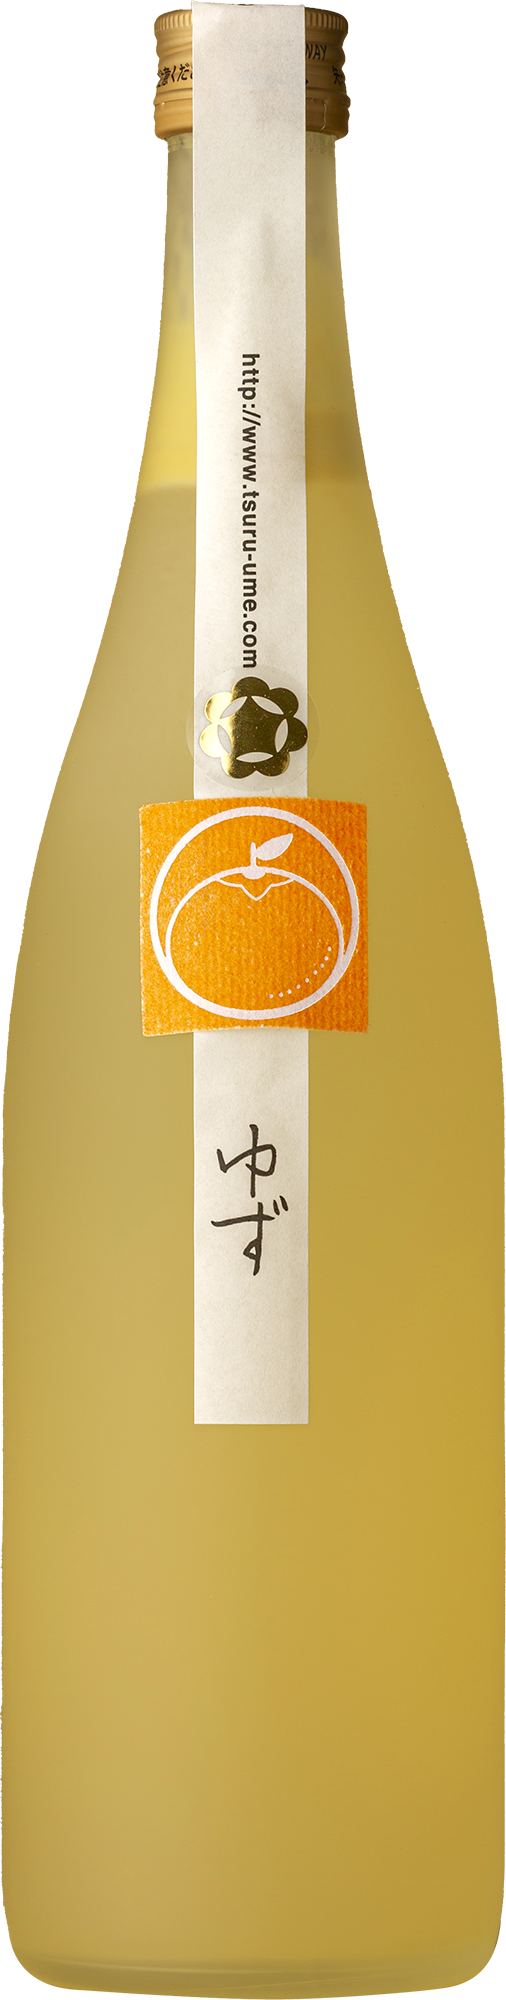 Heiwa - Tsuru-Ume Yuzushu 720mL Not Wine